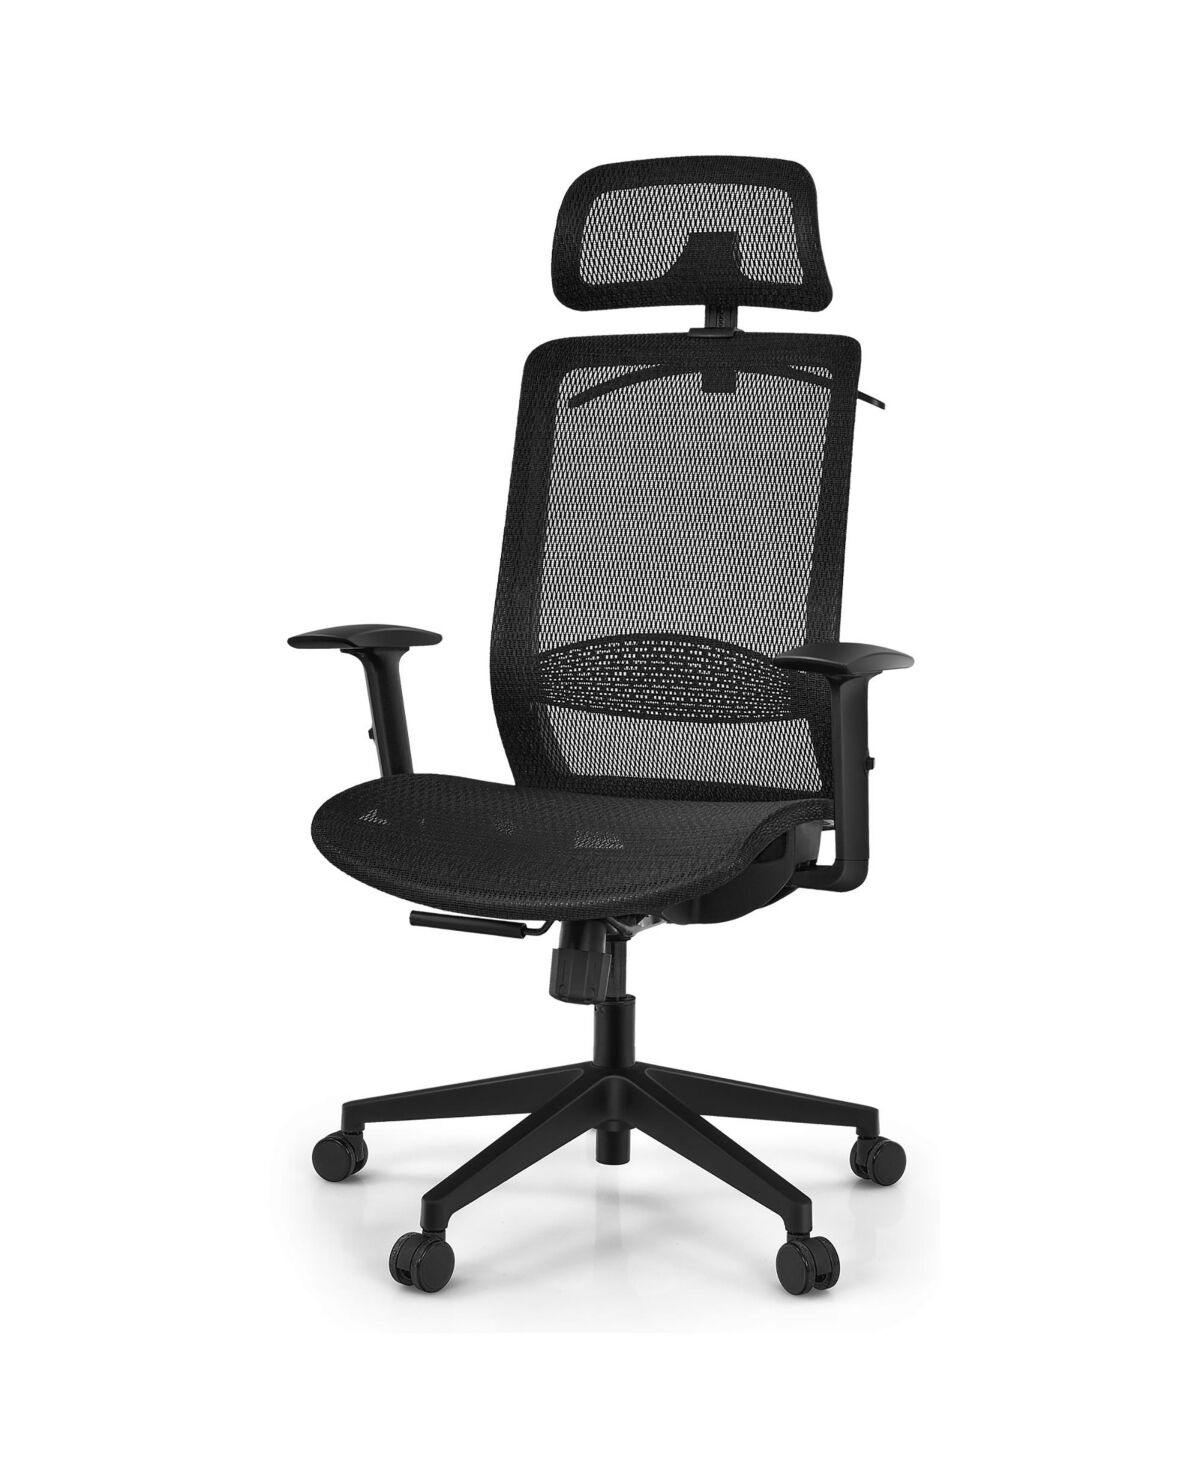 Costway Ergonomic High Back Mesh Office Chair Recliner Task Chair - Black